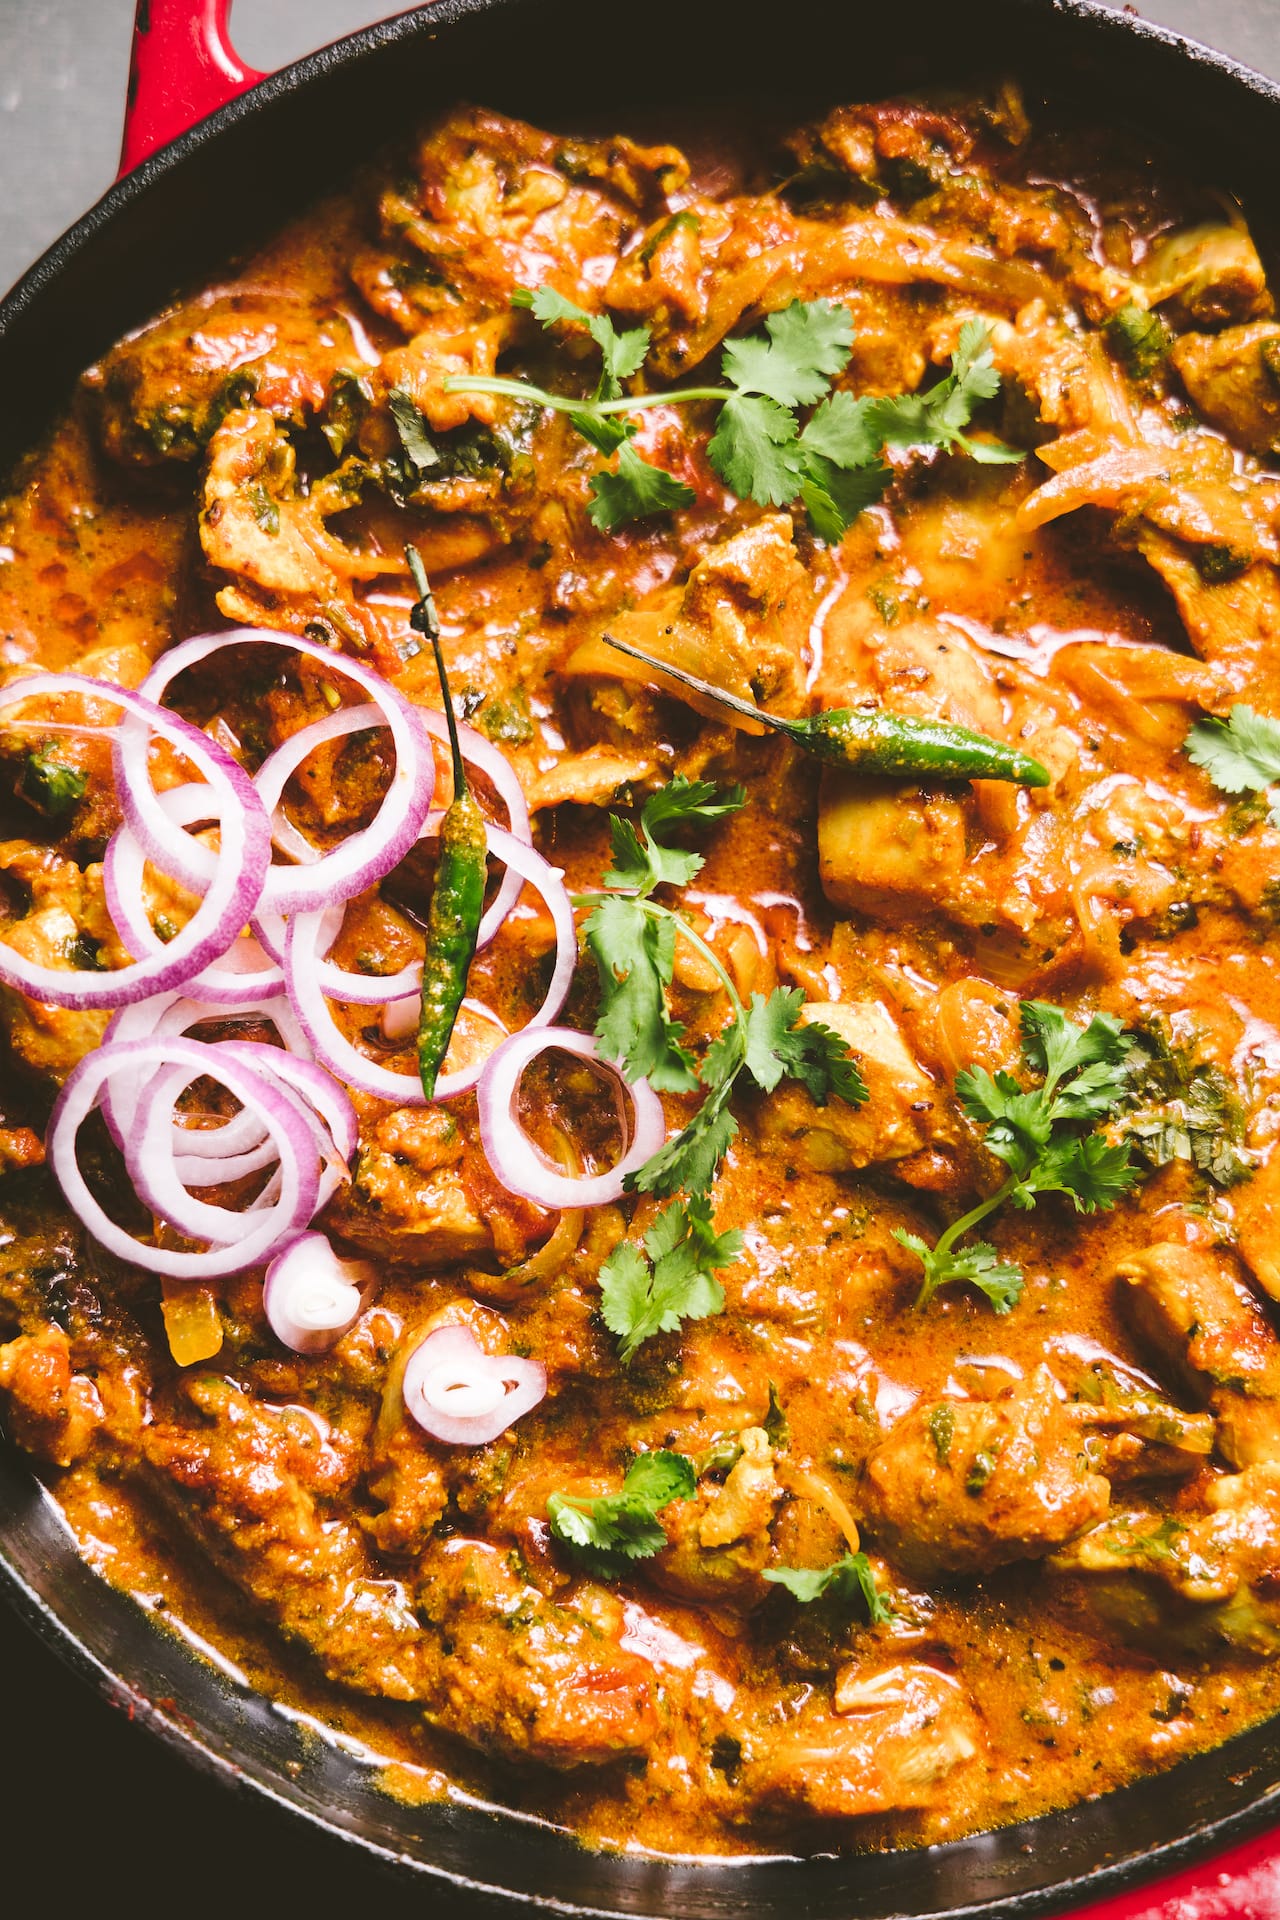 Boneless Chicken Curry - Weeknight meal